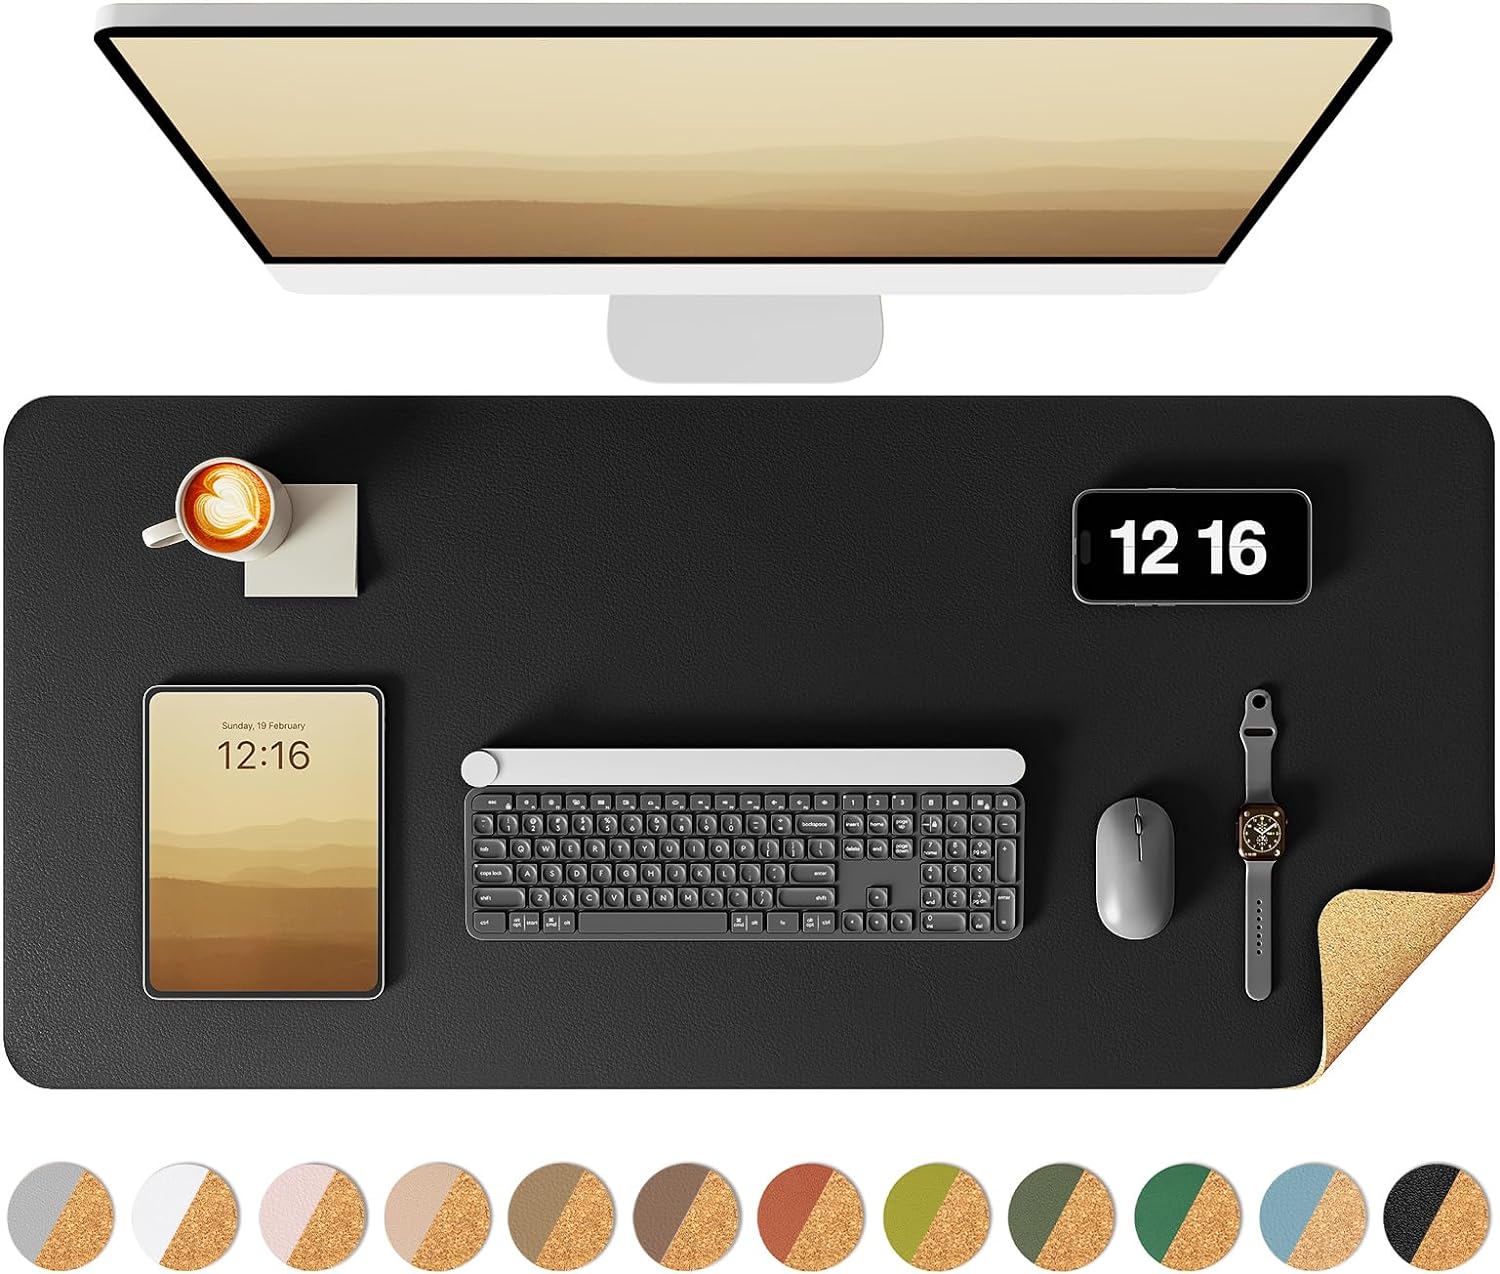 YSAGi Double-Sided Desk Pad, Leather Desk Mat, Eco Cork Desk Pad Protector, Large Mouse Pad for Desk, Waterproof Desk Blotter Pad, Desk Writing Pad for Office Work/Home(23.6"x13.7",Black+Cork)